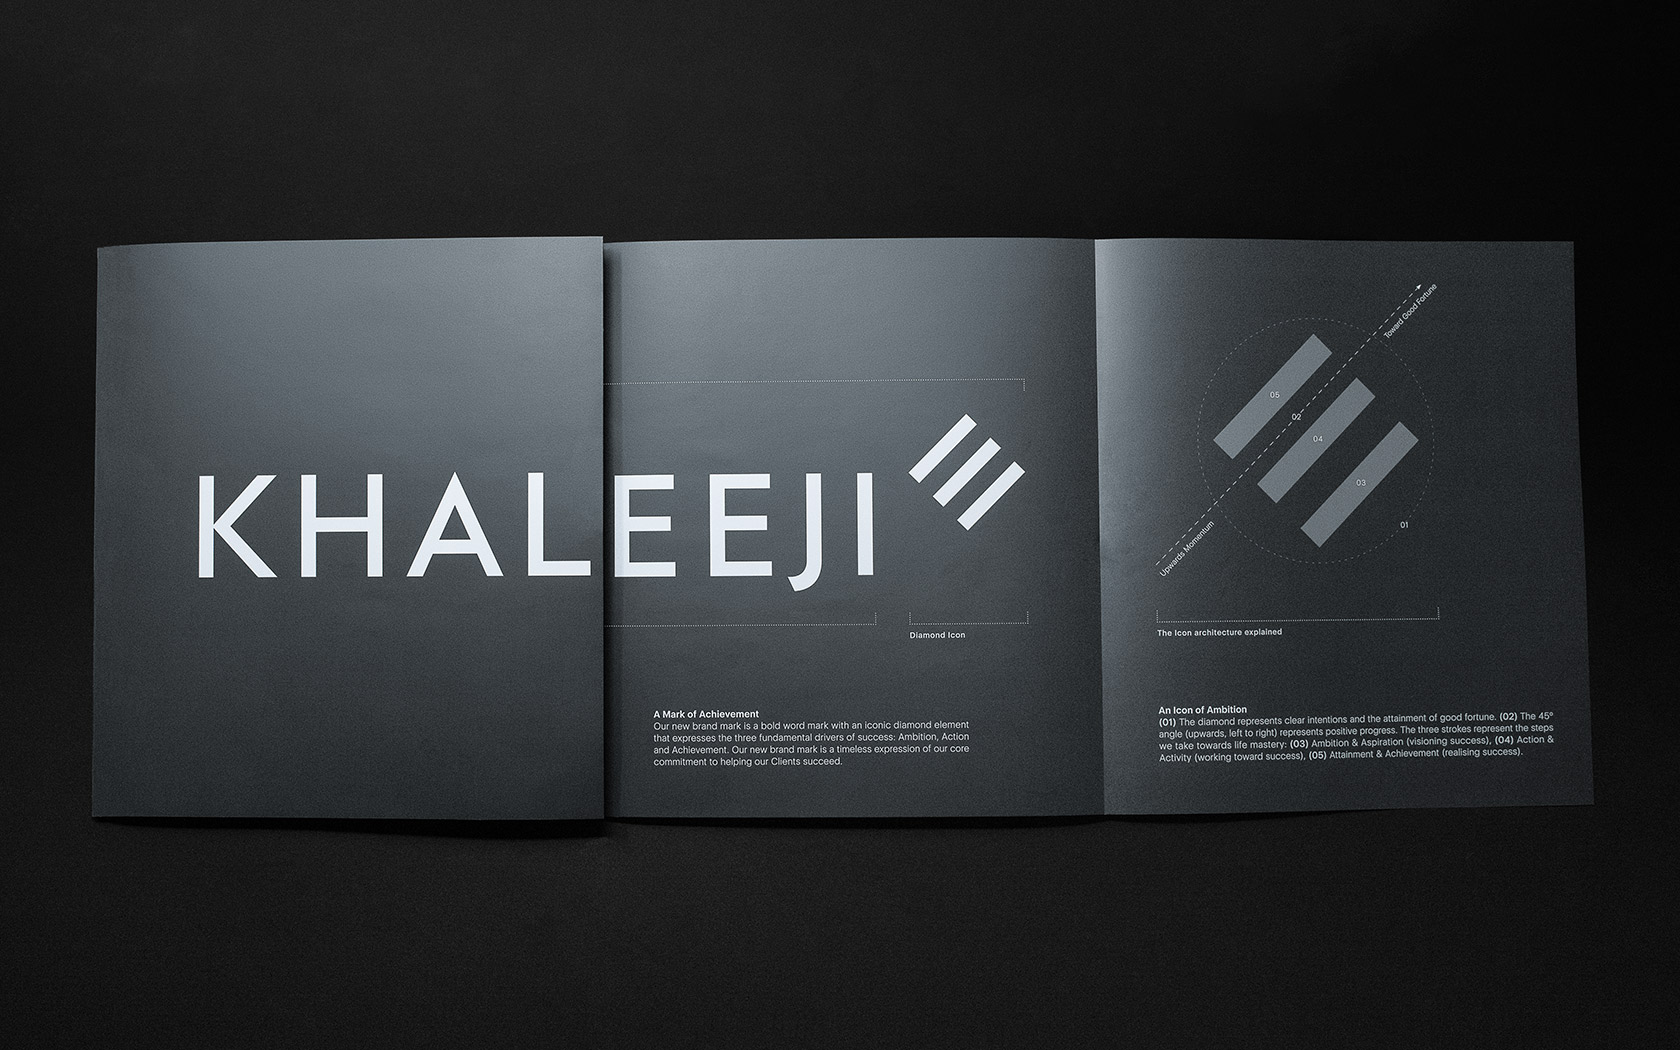 Khaleeji Brand Book. Brand logo spread and explanation